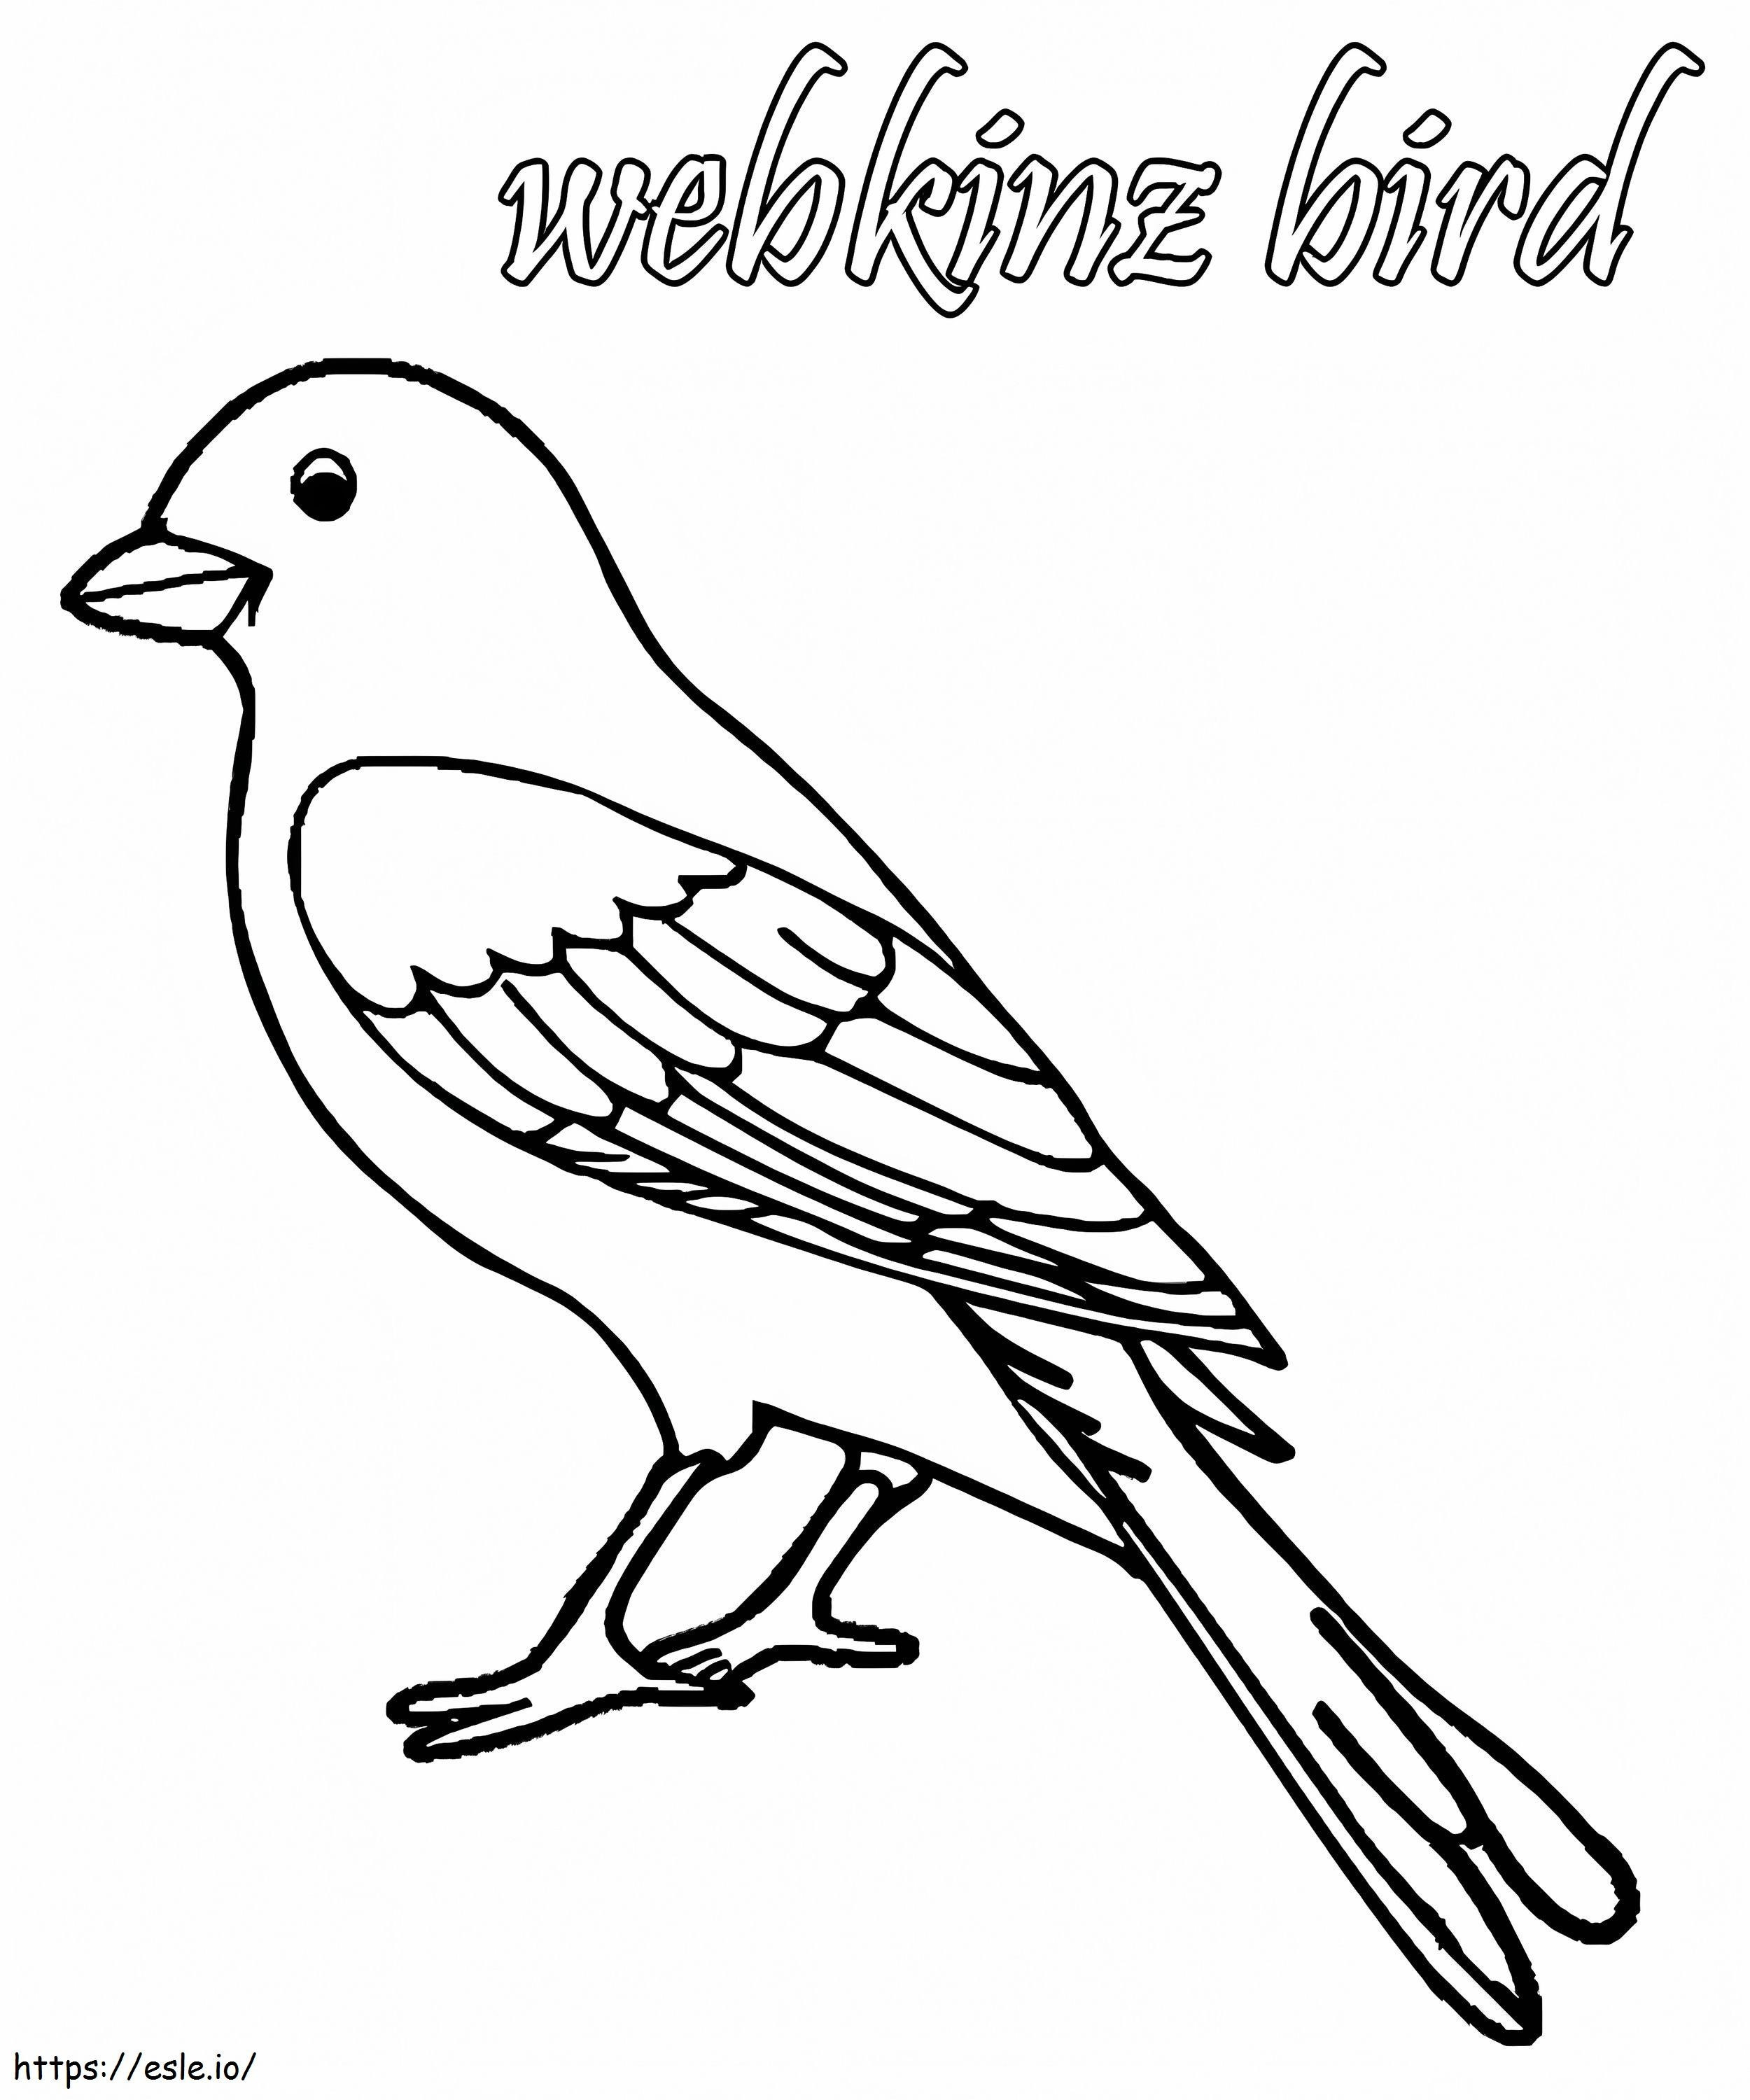 Coloriage Oiseau Webkinz à imprimer dessin